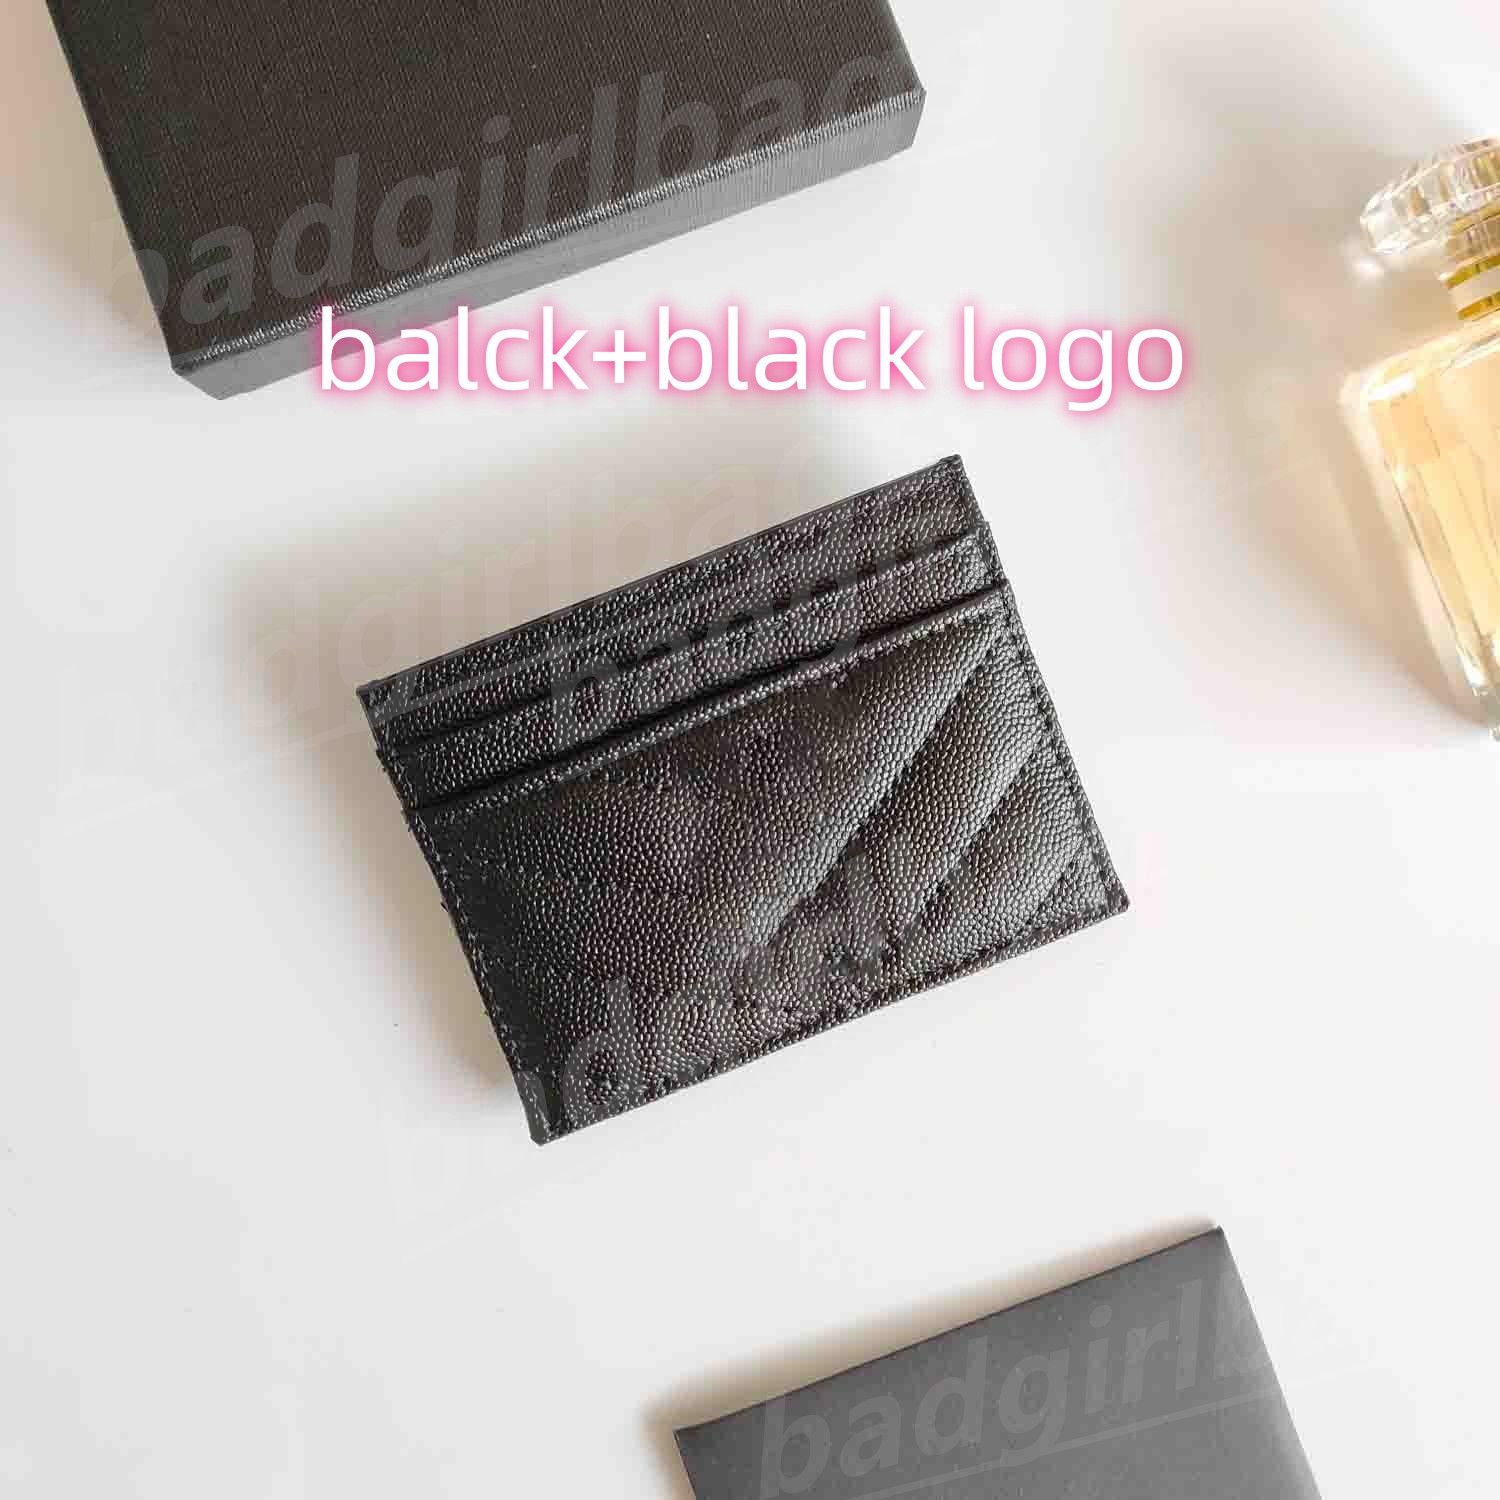 1-balck+black logo